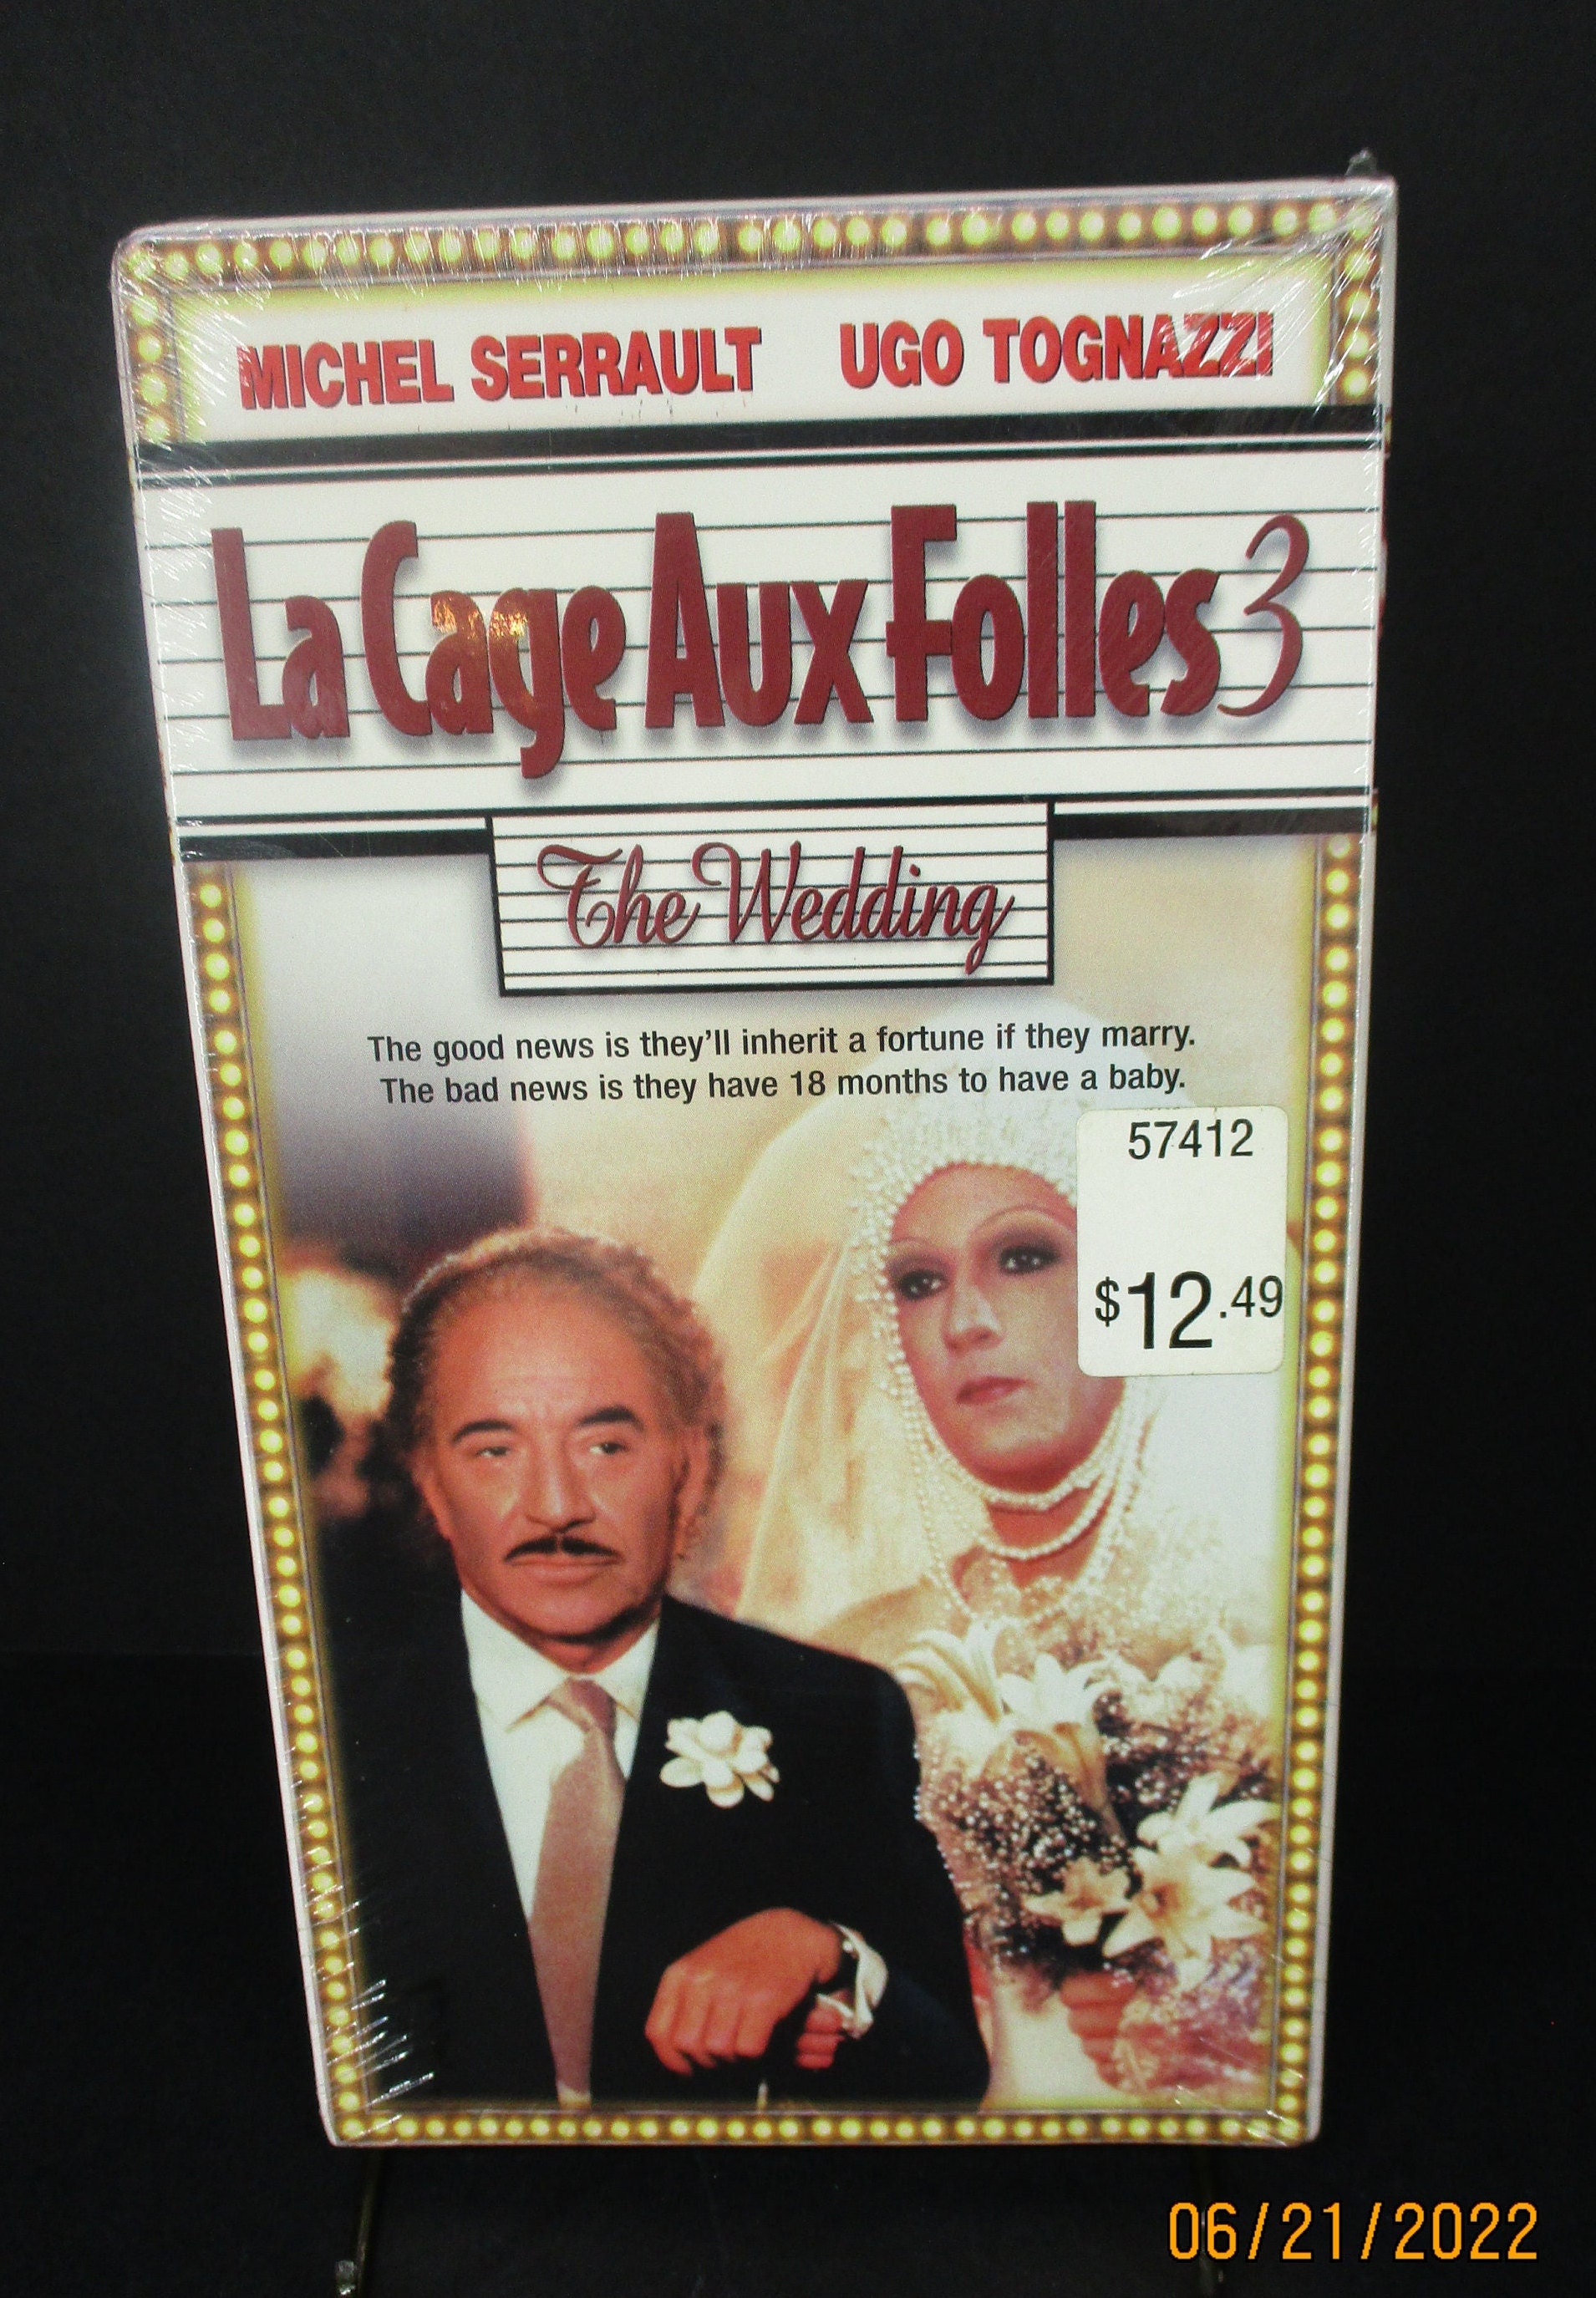 Pedestrian Happy homosexual La Cage Aux Folles 3 the Wedding VHS 1996 Brand New Michael - Etsy